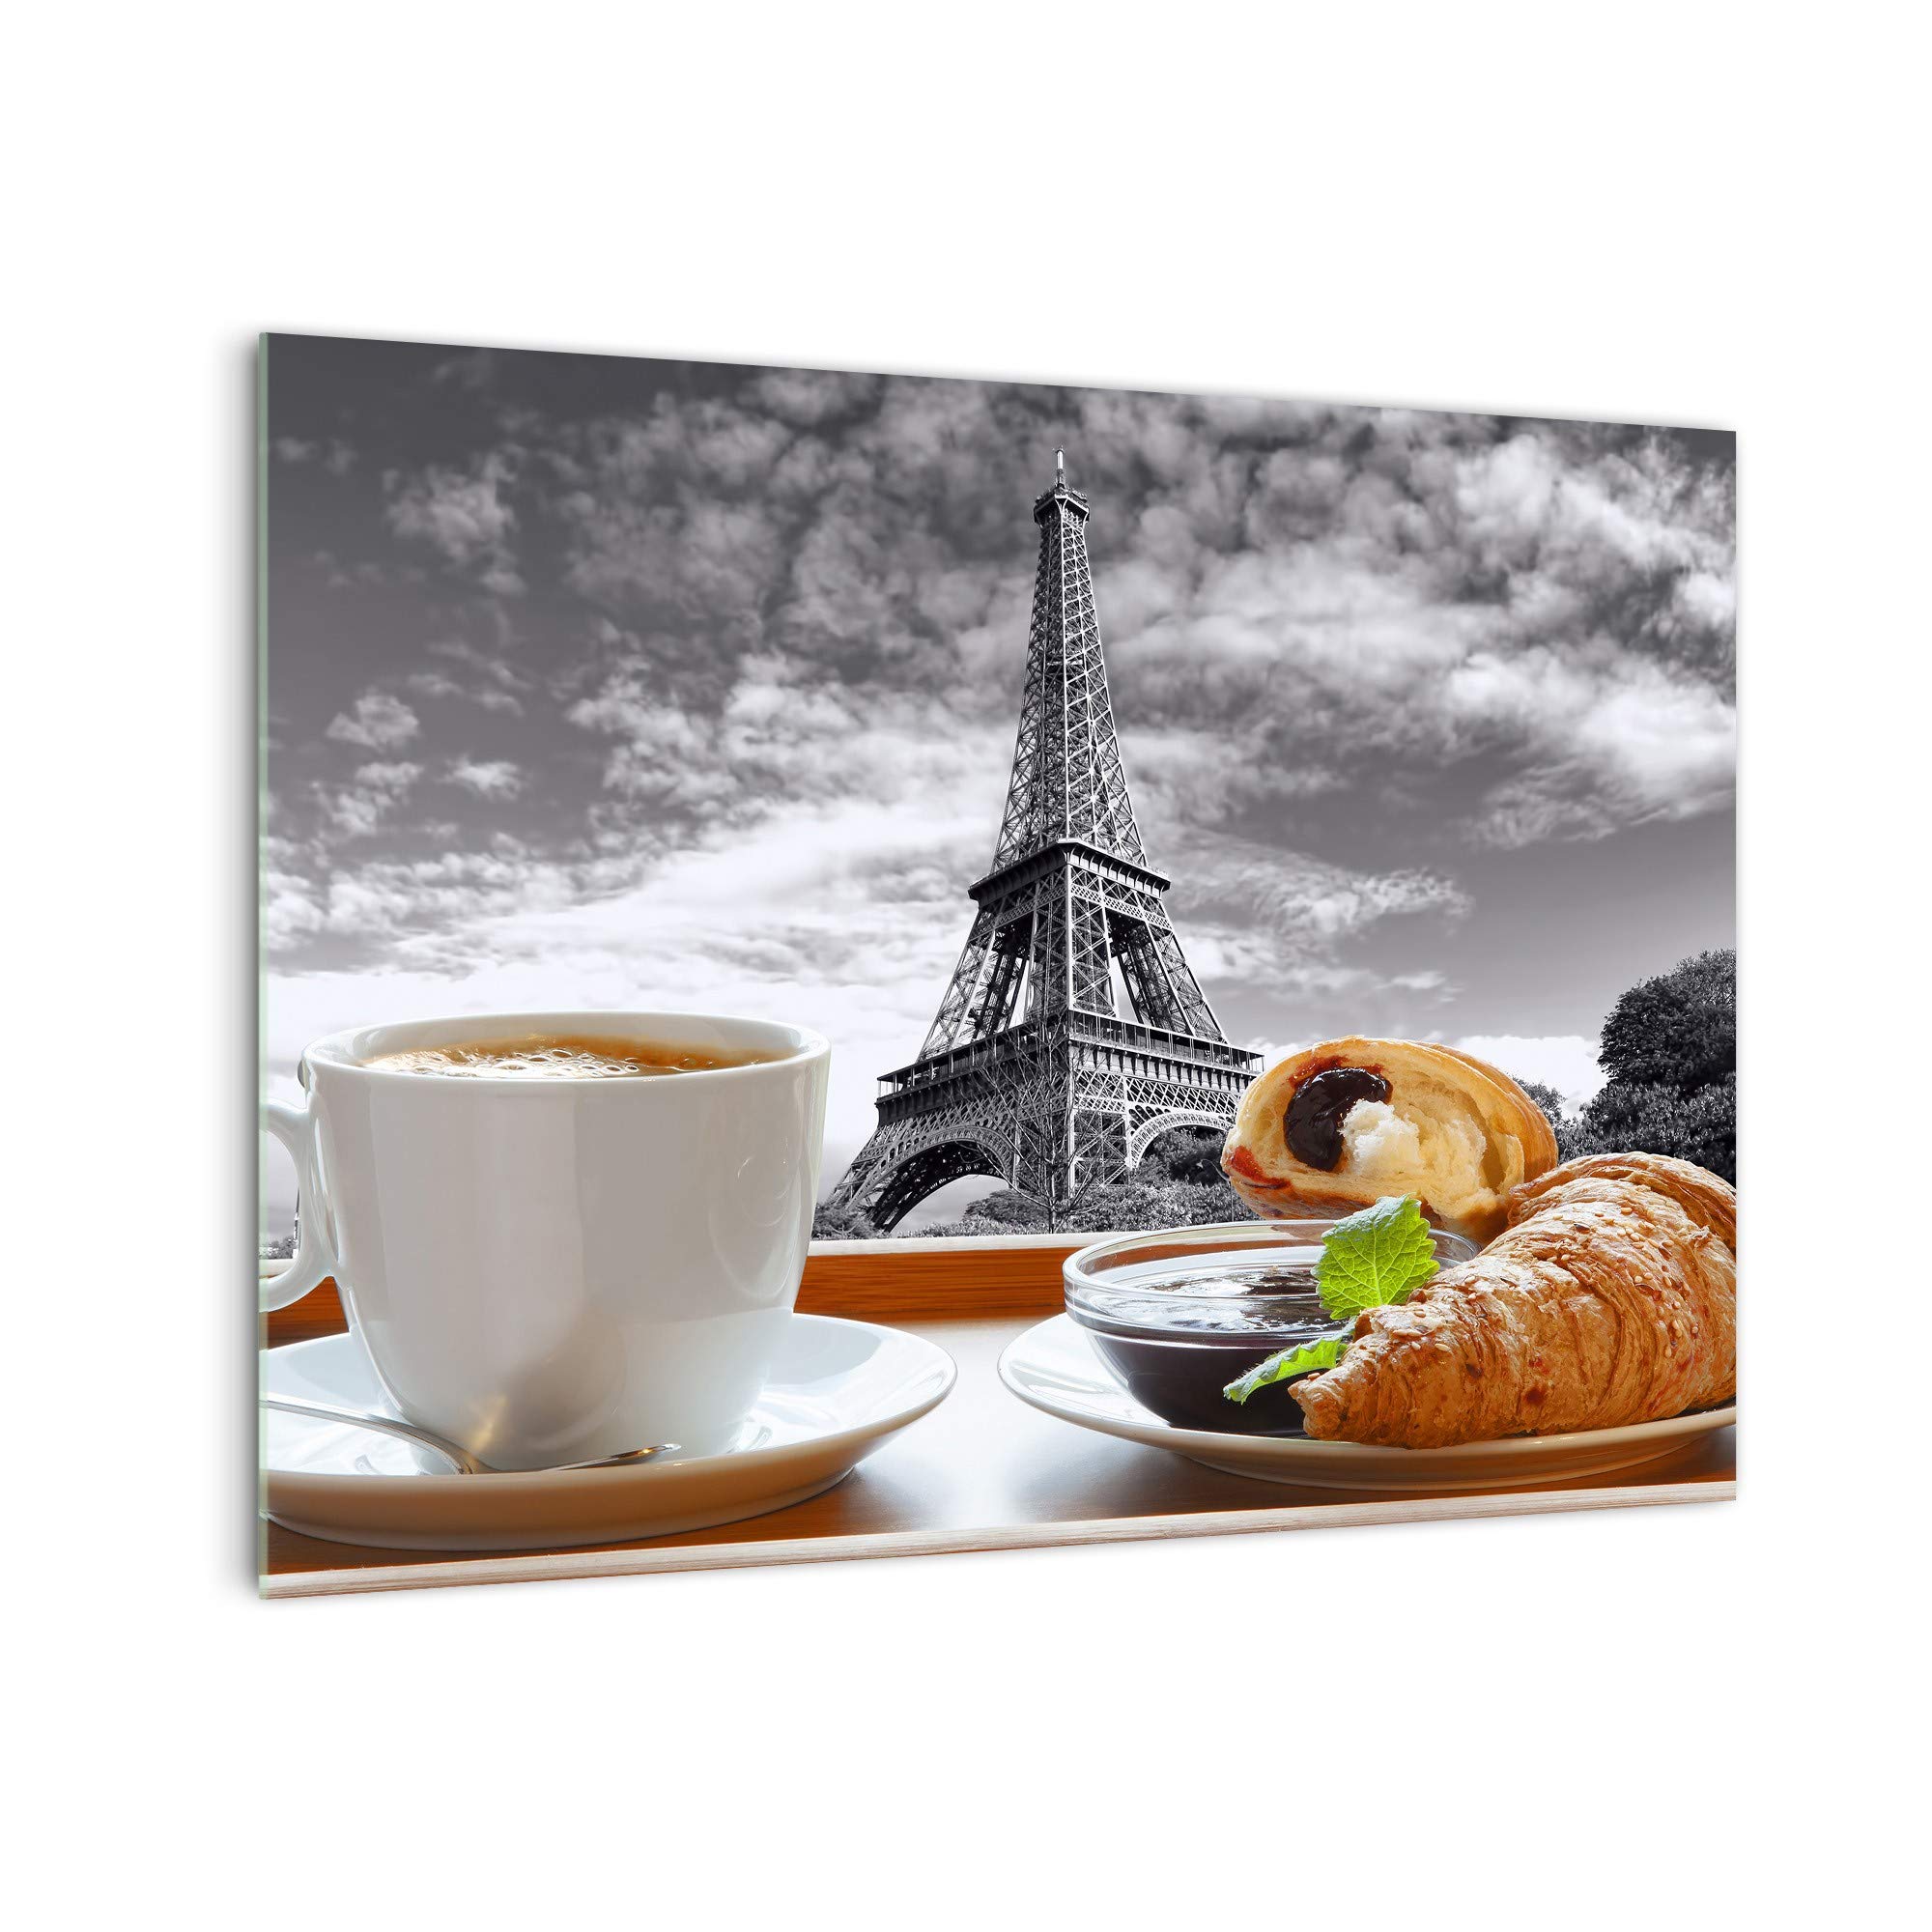 DekoGlas Küchenrückwand 'Eiffelturm Frühstück' in div. Größen, Glas-Rückwand, Wandpaneele, Spritzschutz & Fliesenspiegel